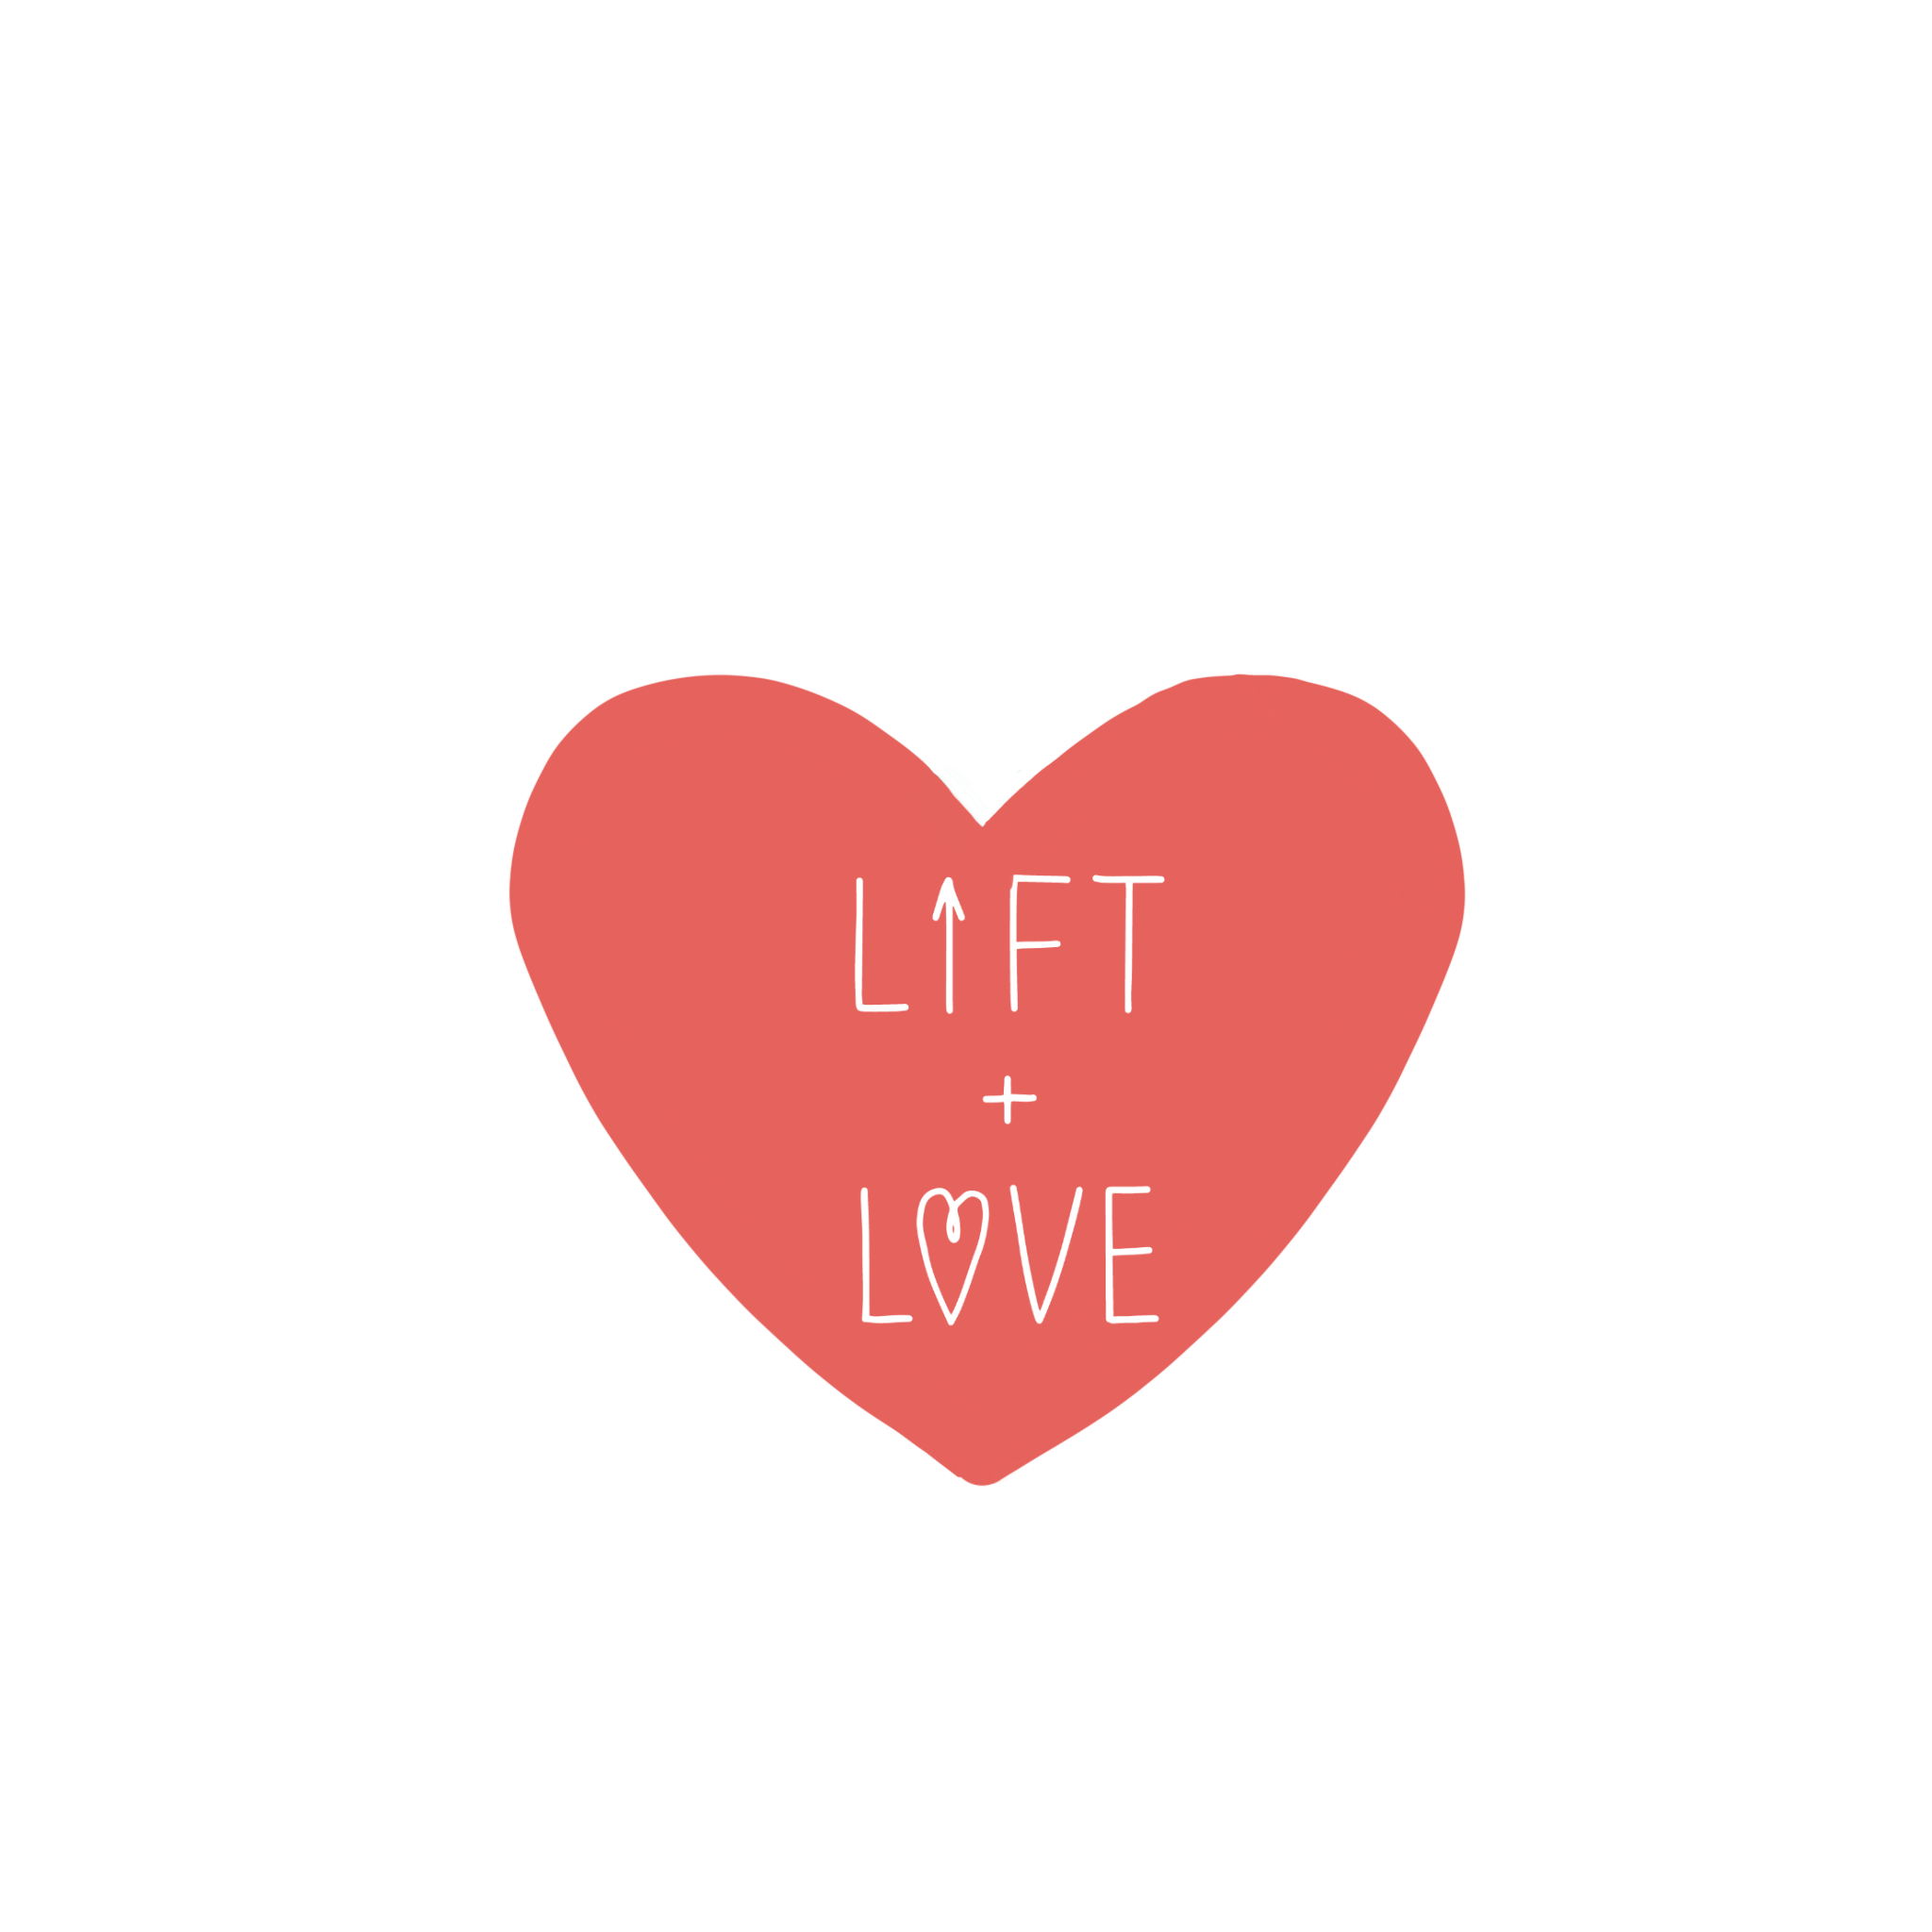 Lift + Love